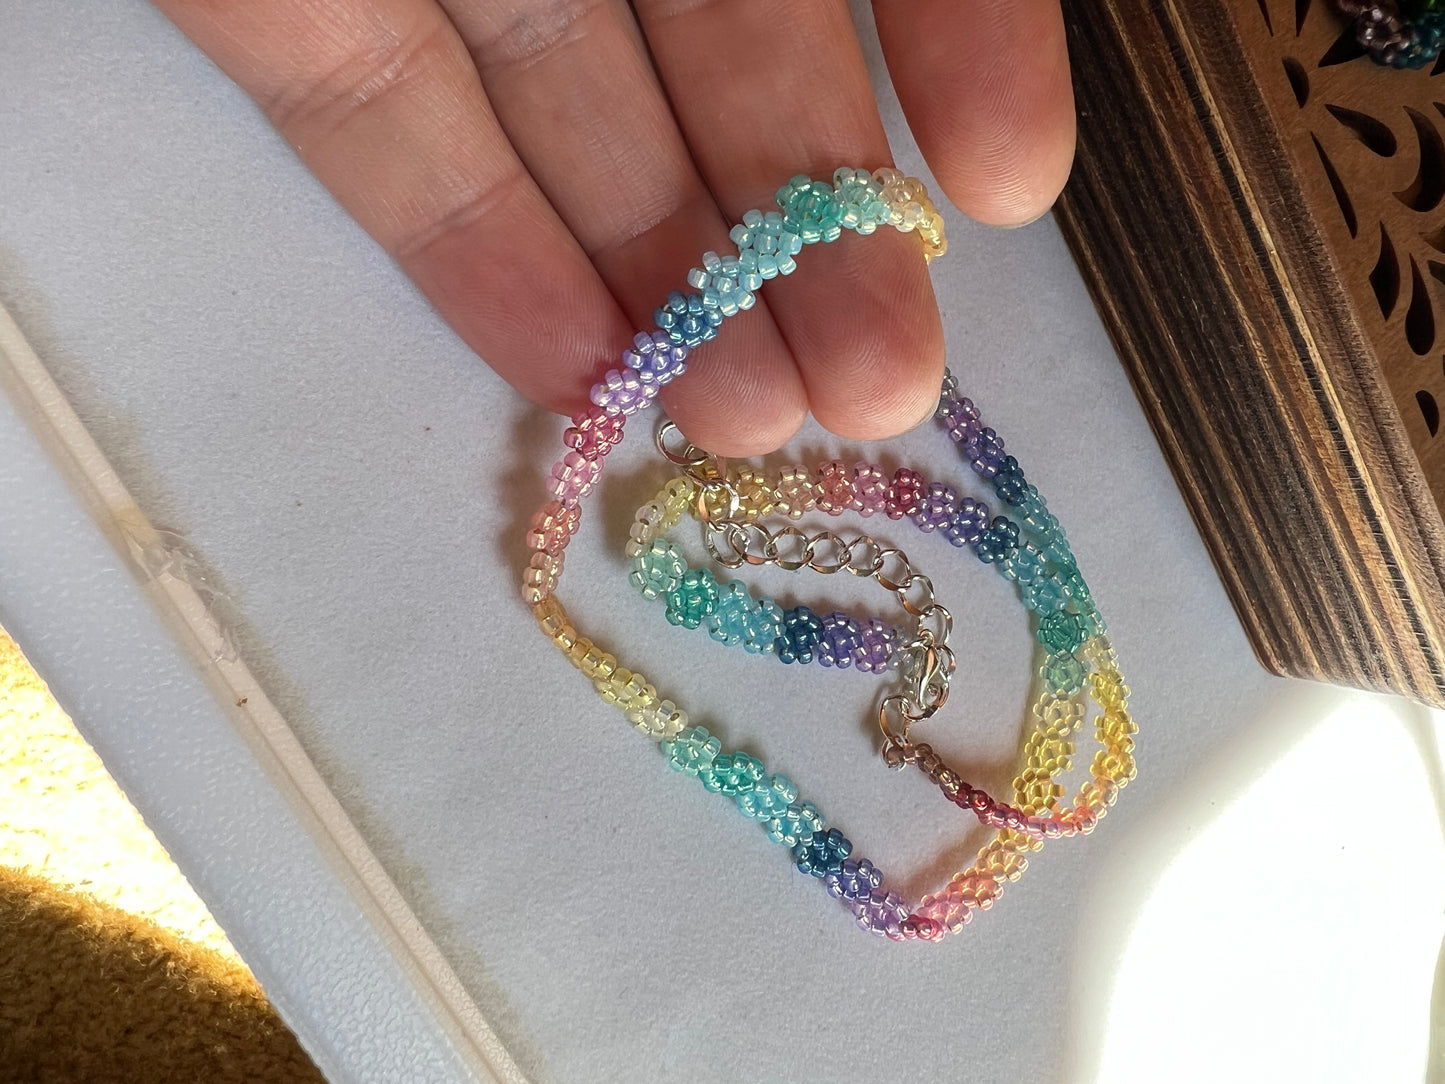 Pastel Rainbow flower chain necklace